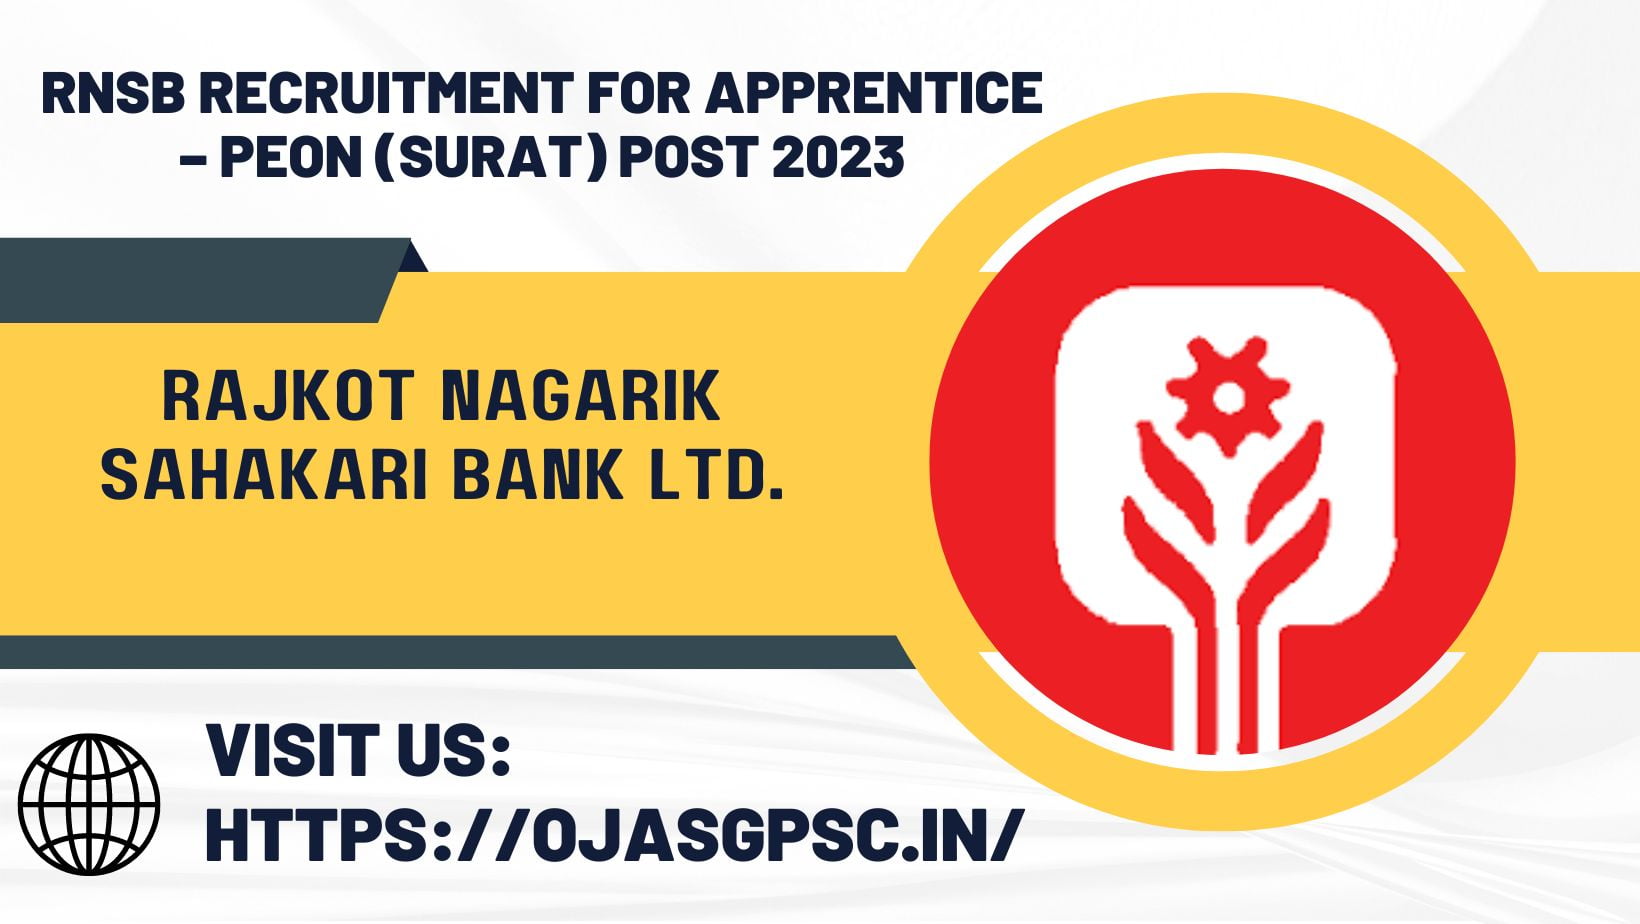 Rajkot Nagarik Sahakari Bank Ltd. (RNSB) Recruitment for Apprentice – Peon (Surat) Post 2023